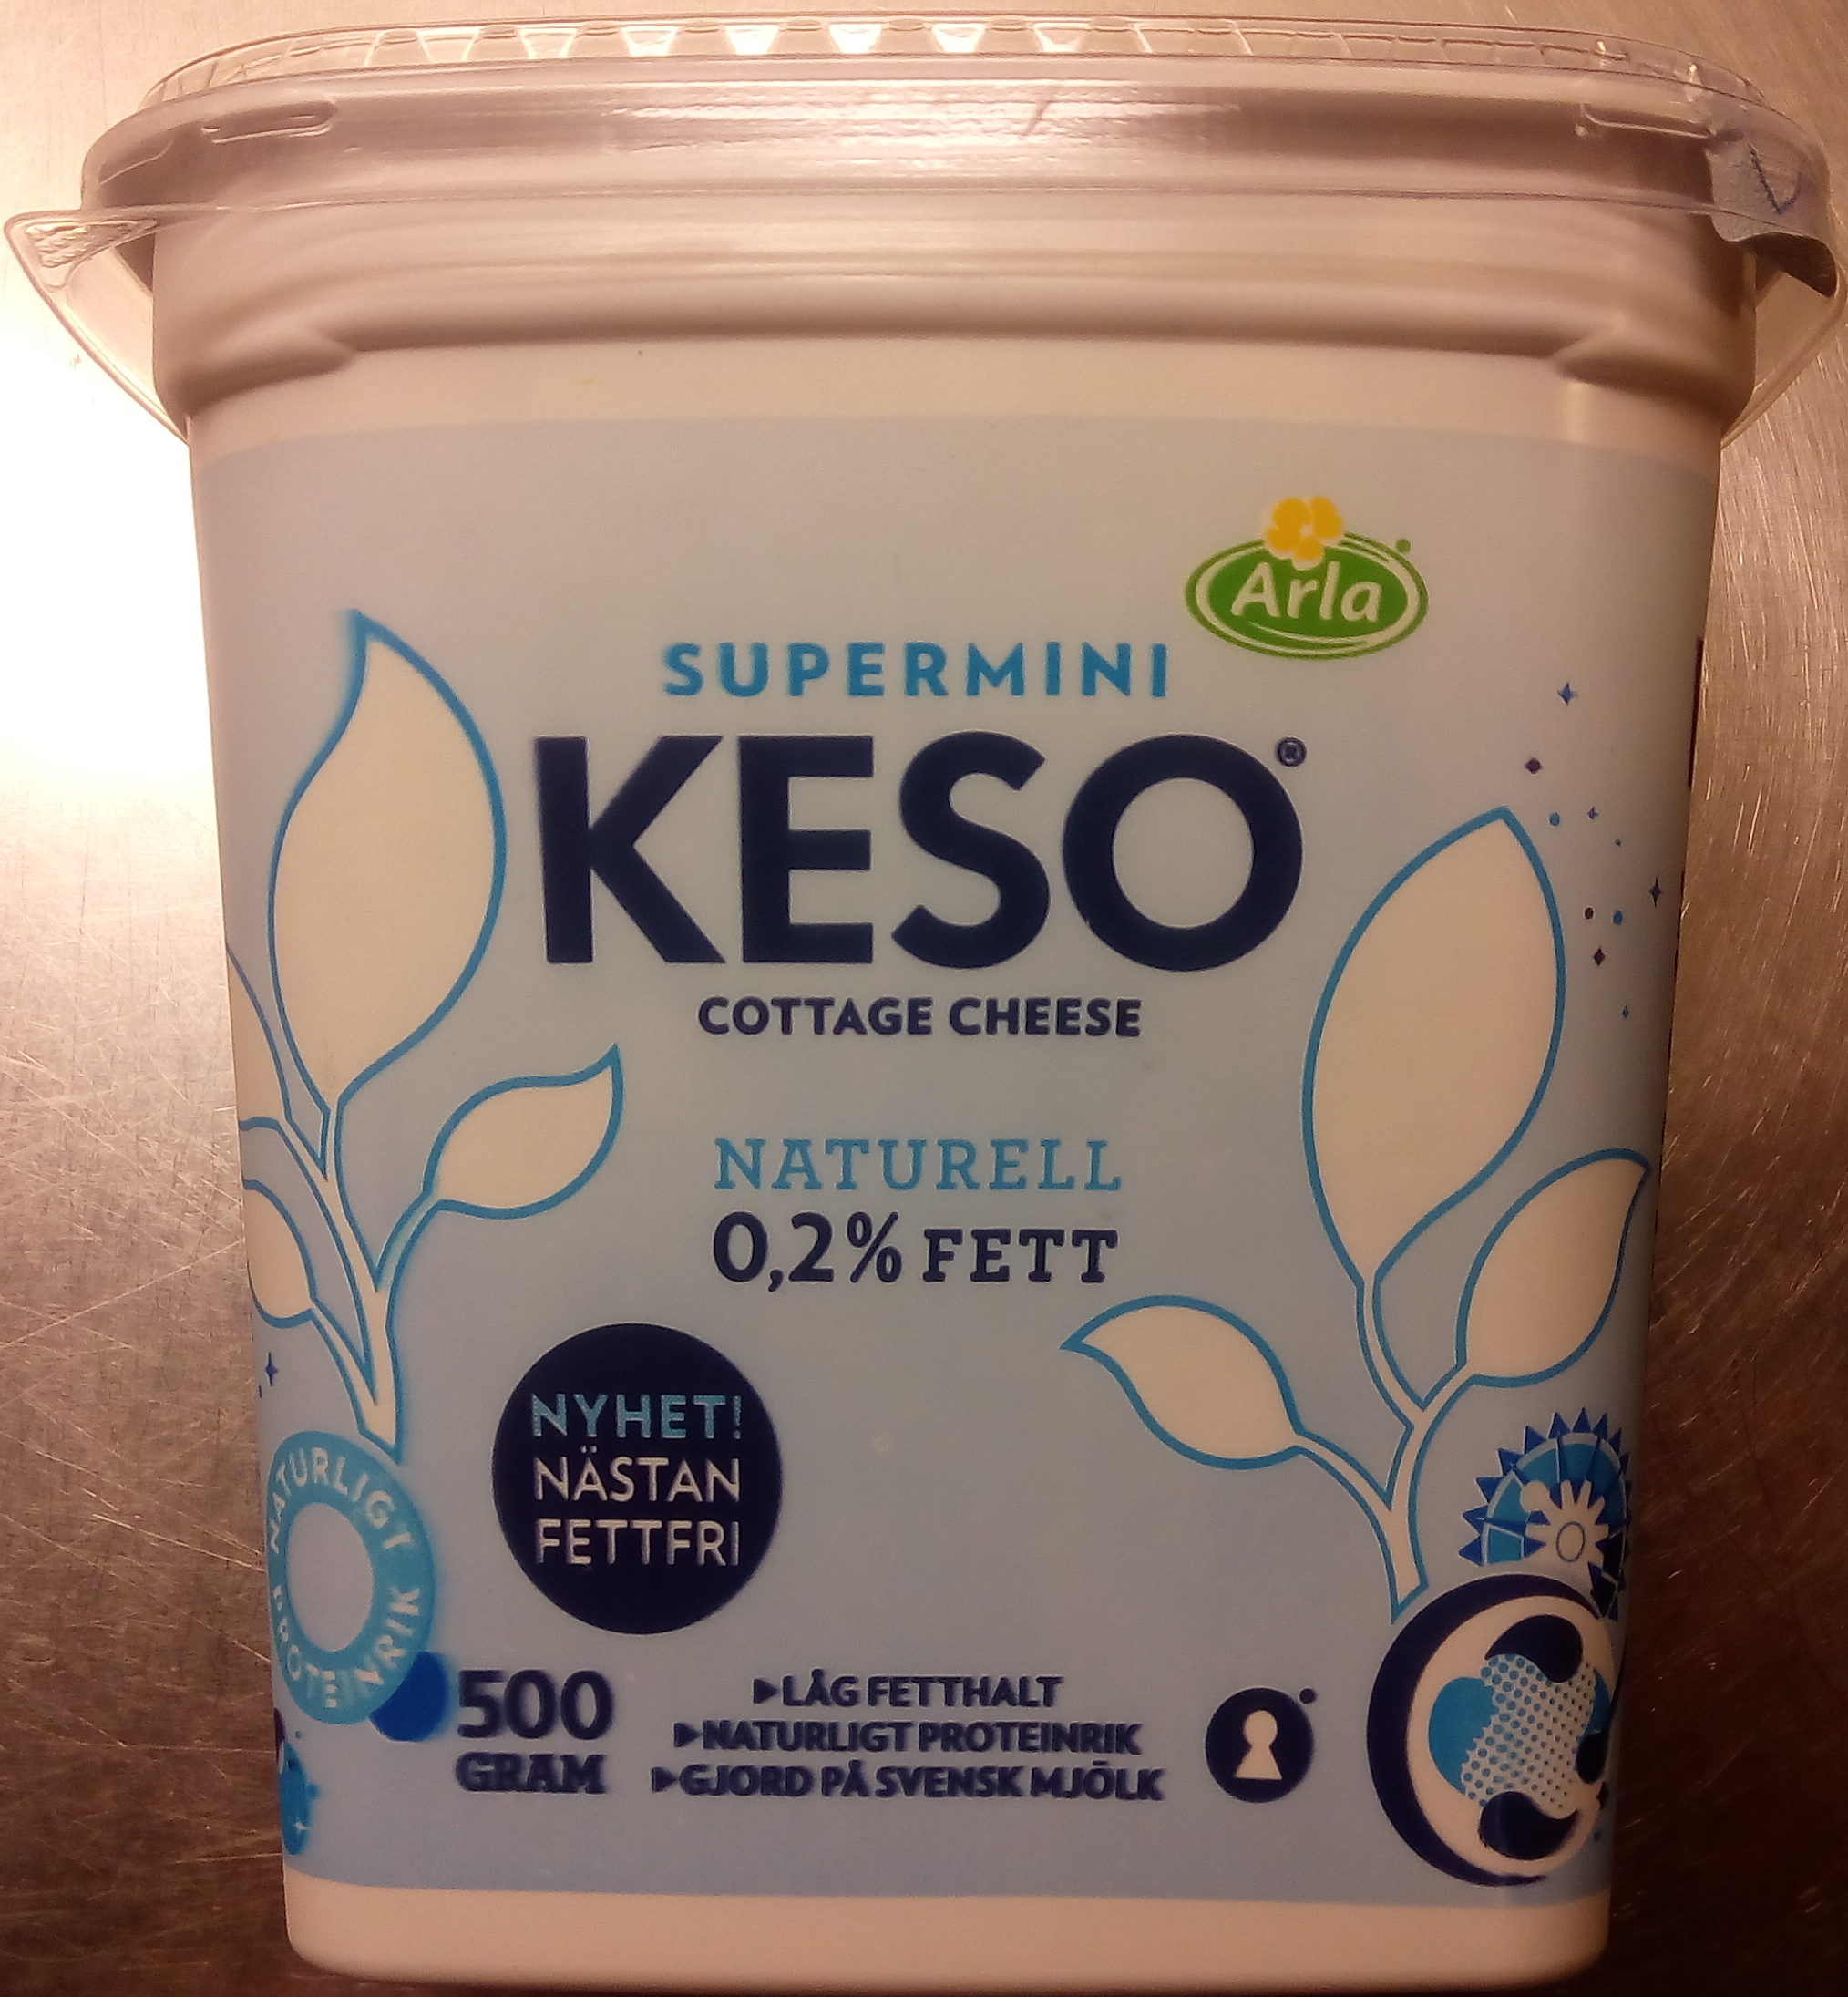 KESO Cottage Cheese Supermini Naturell - Produkt - sv